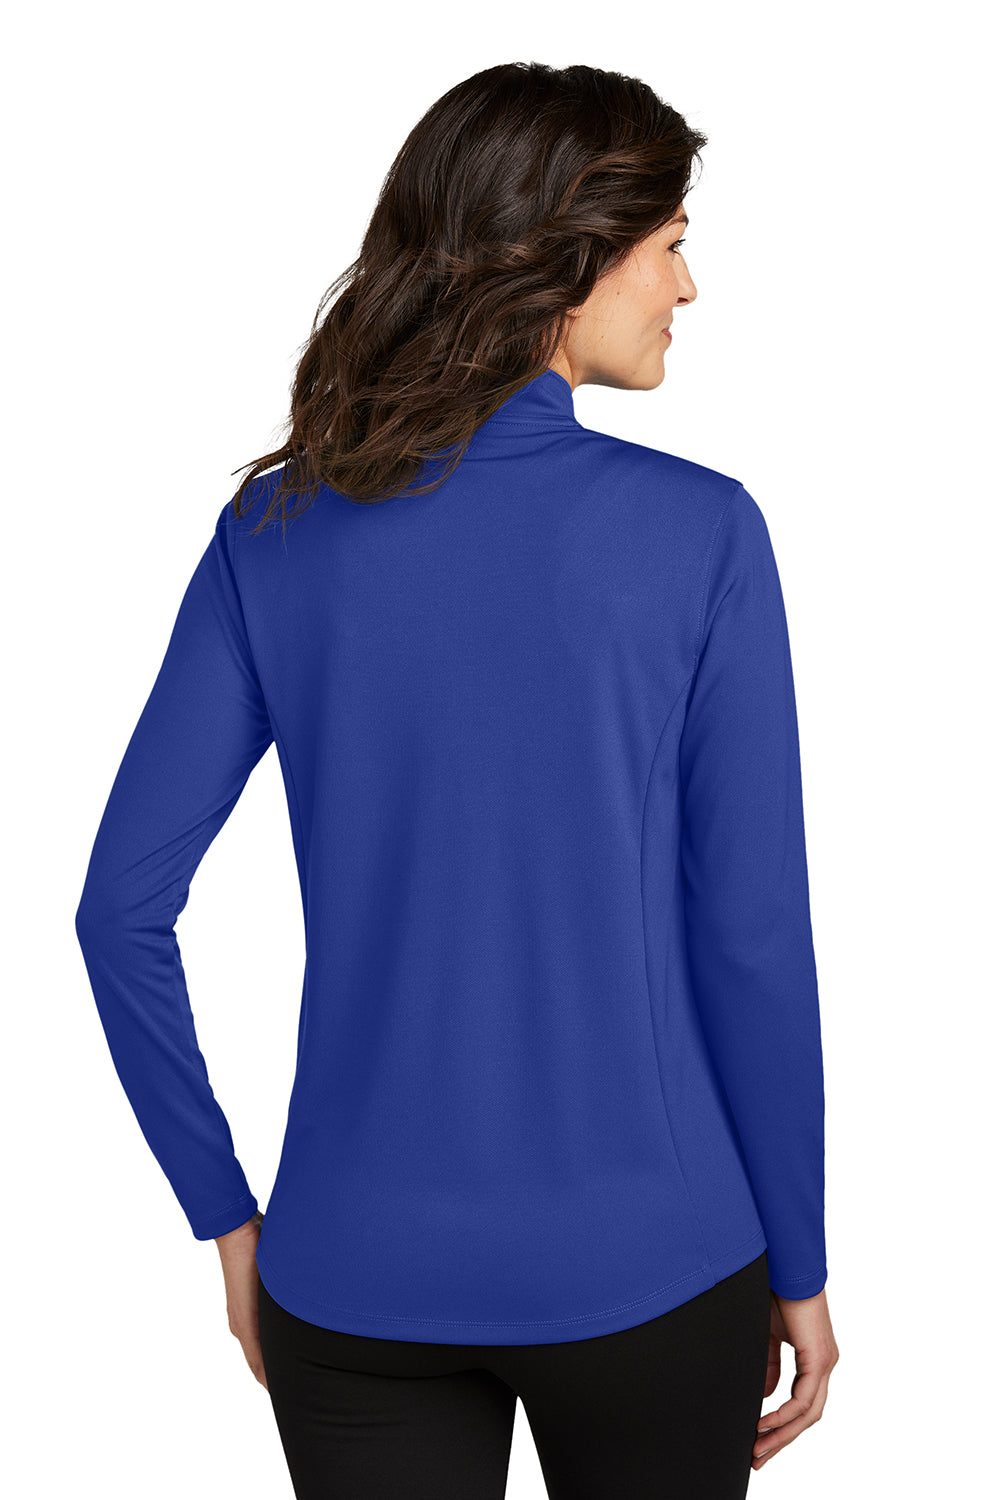 Port Authority LK112 Womens Dry Zone UV Micro Mesh 1/4 Zip Sweatshirt True Royal Blue Back